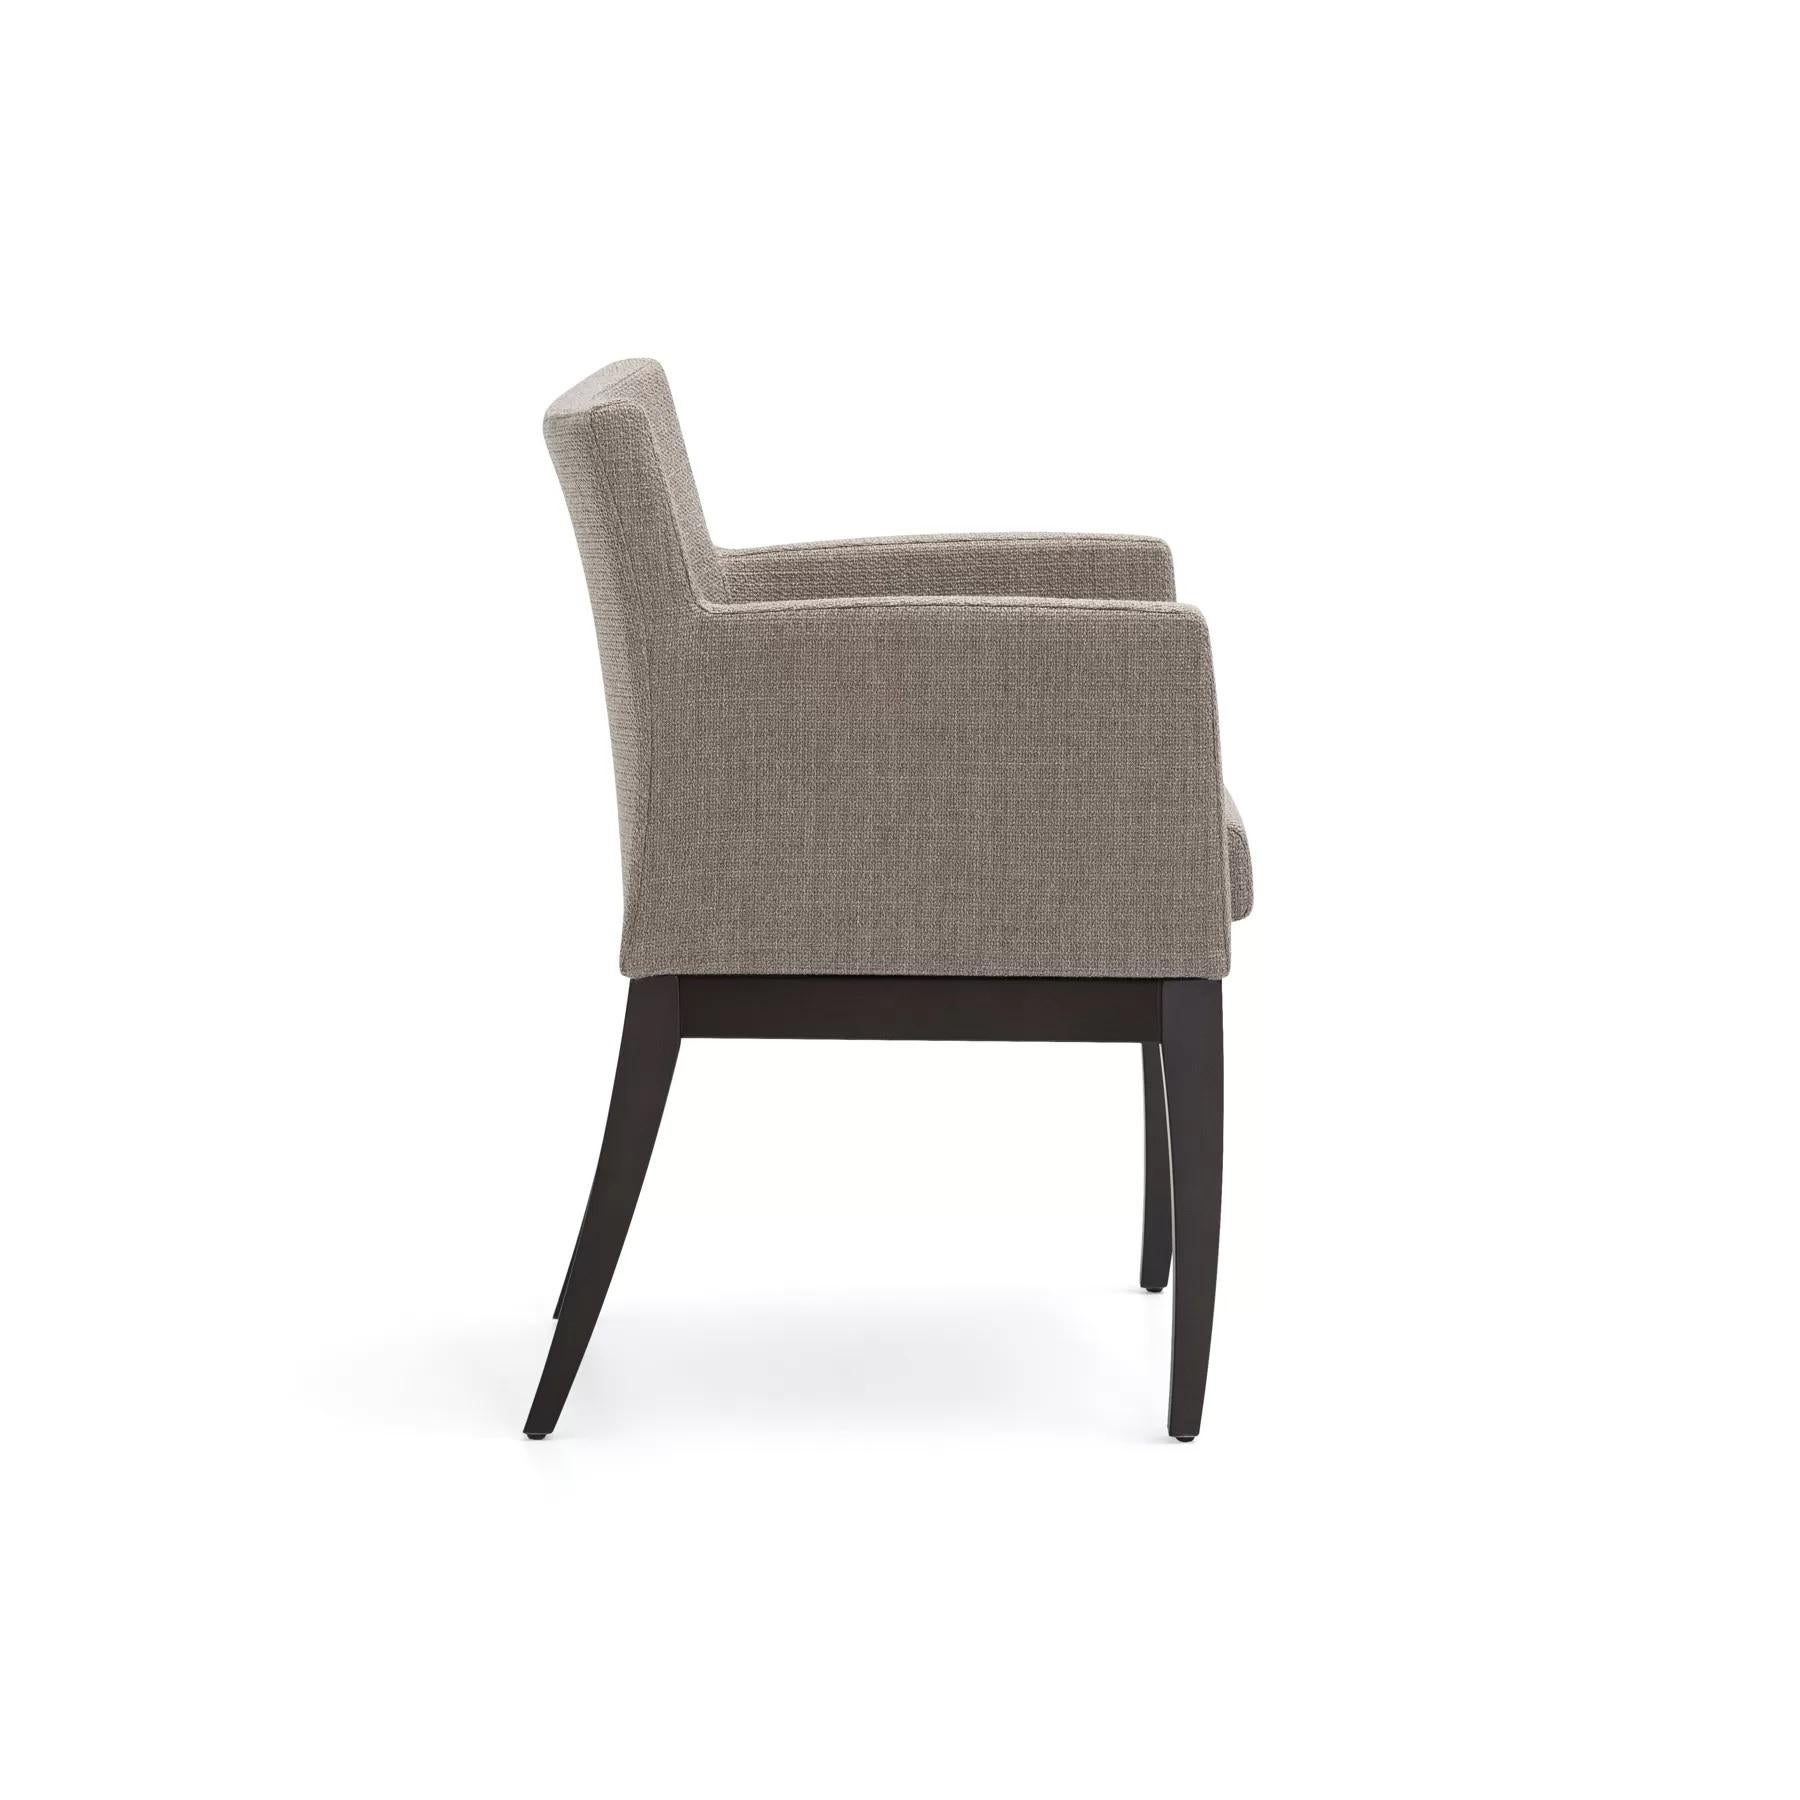 chairs upholstered custom